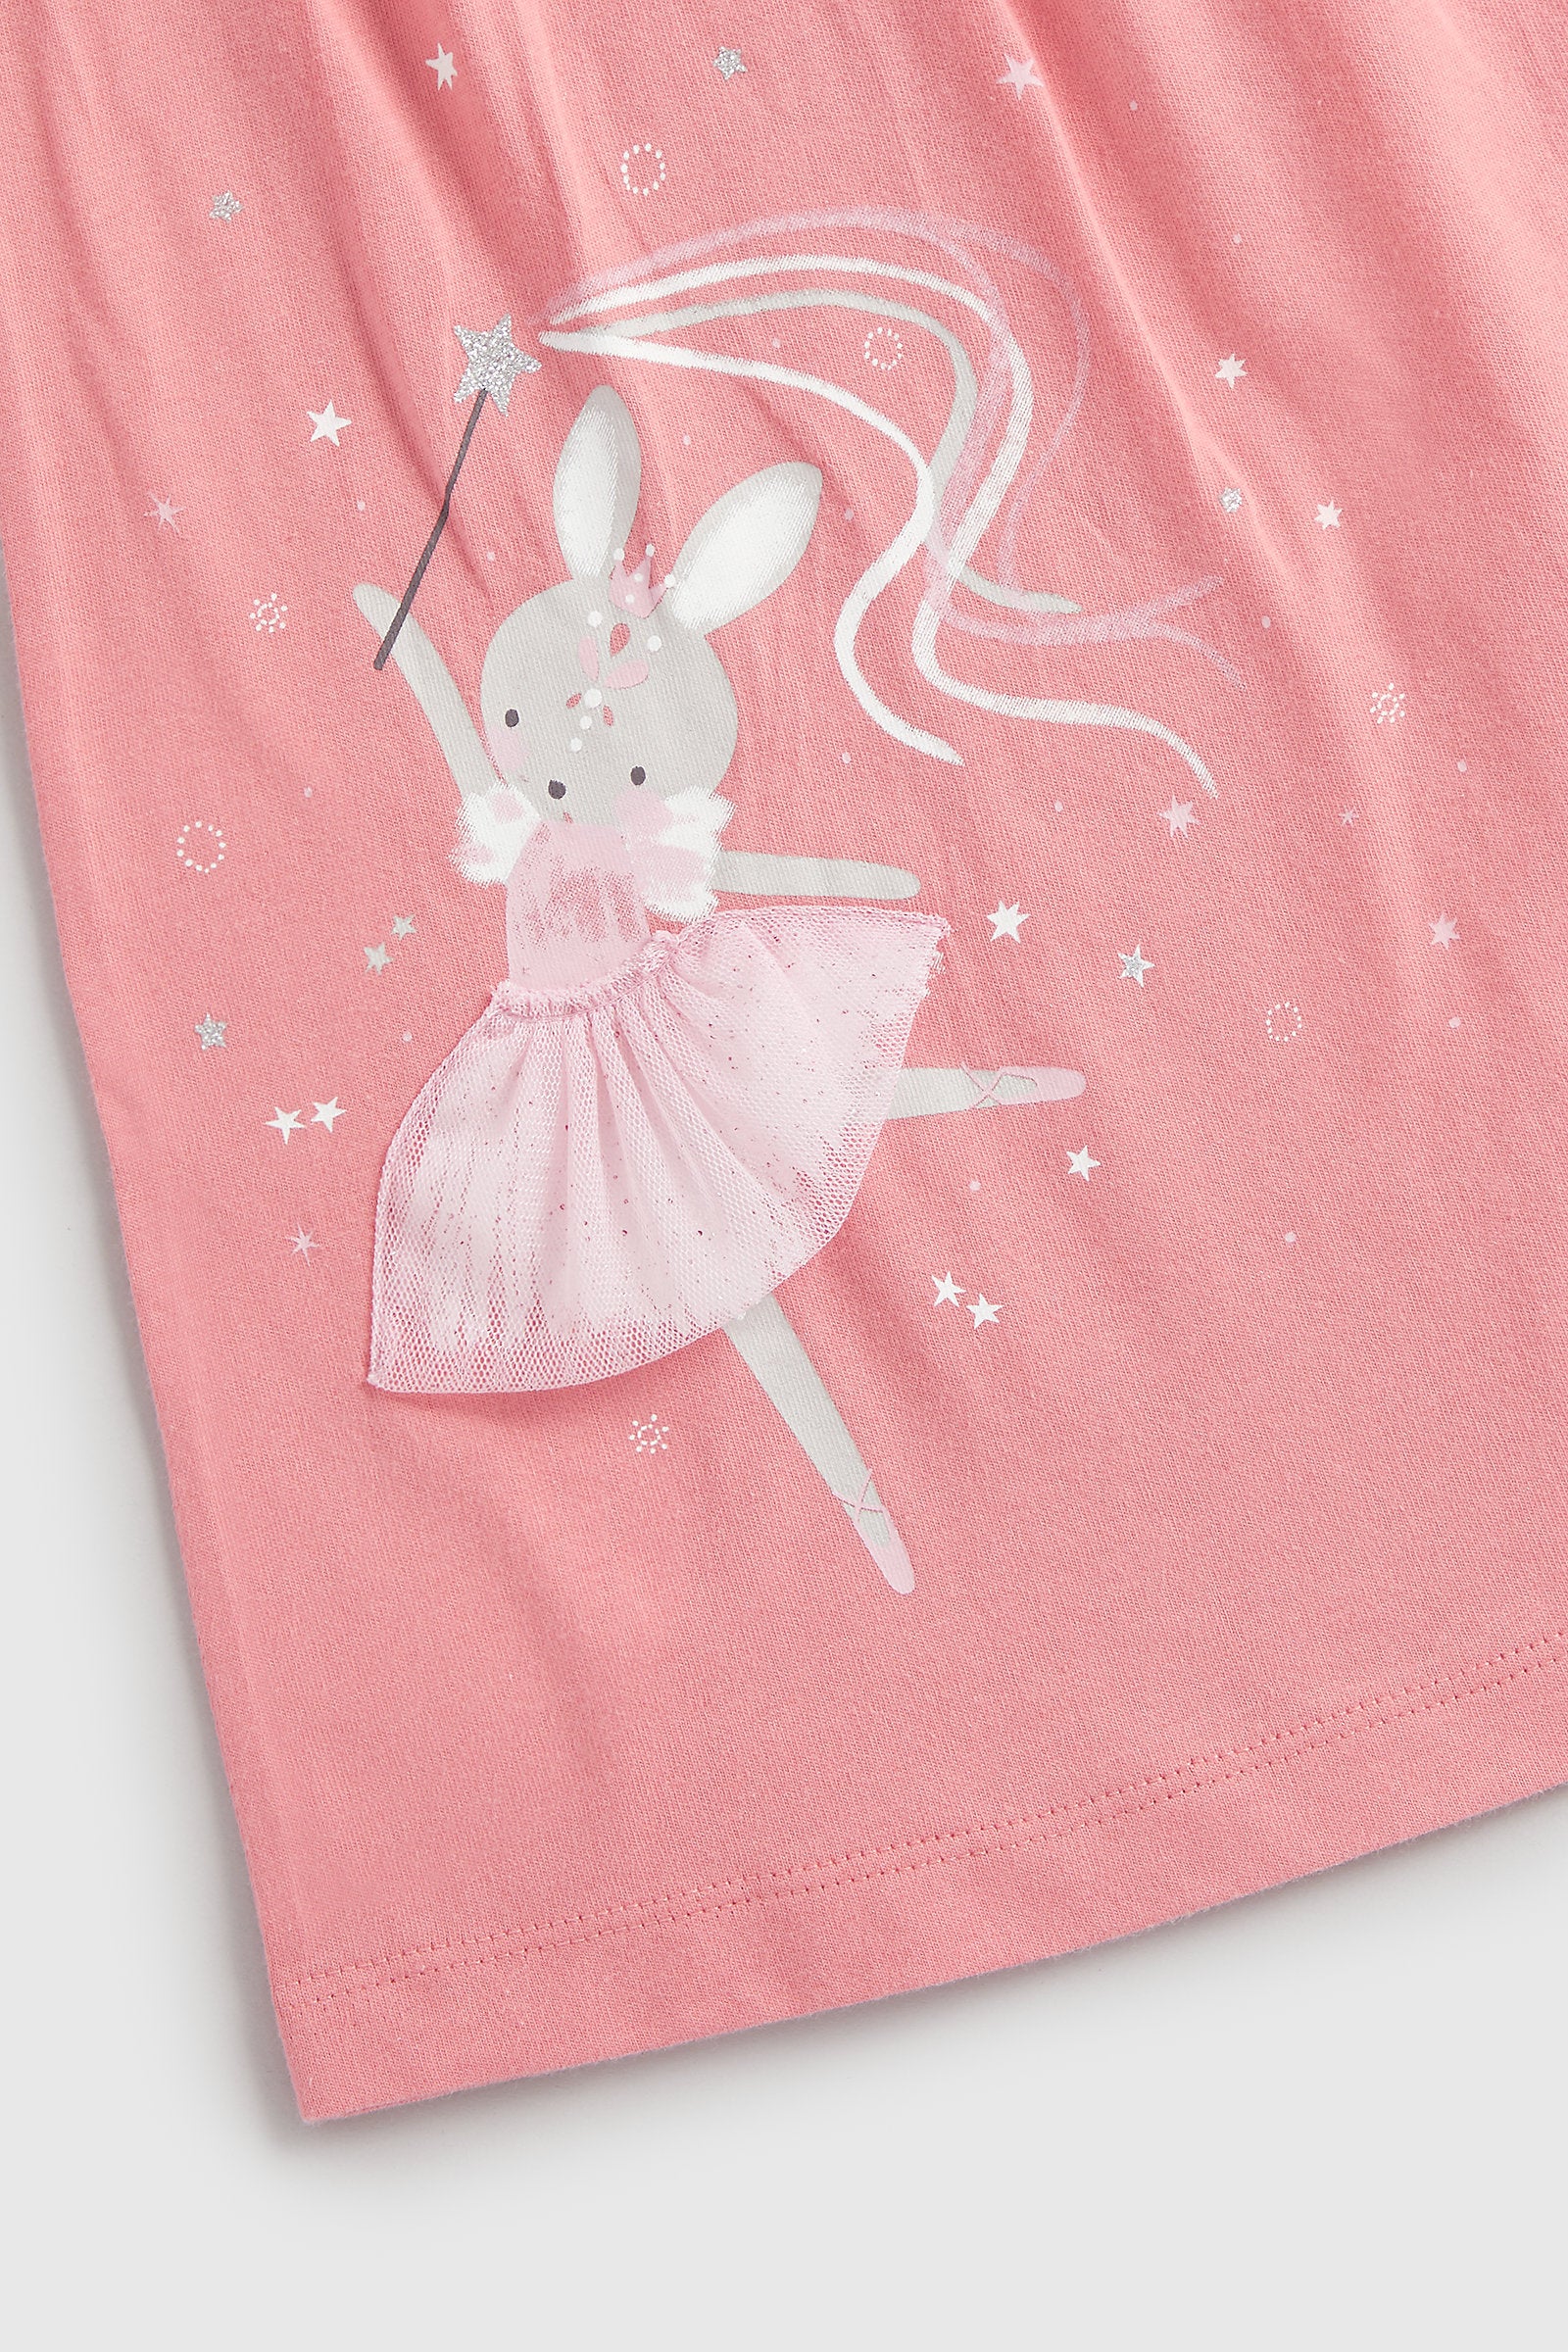 Mothercare Bunny Ballerina Nightdresses - 2 Pack